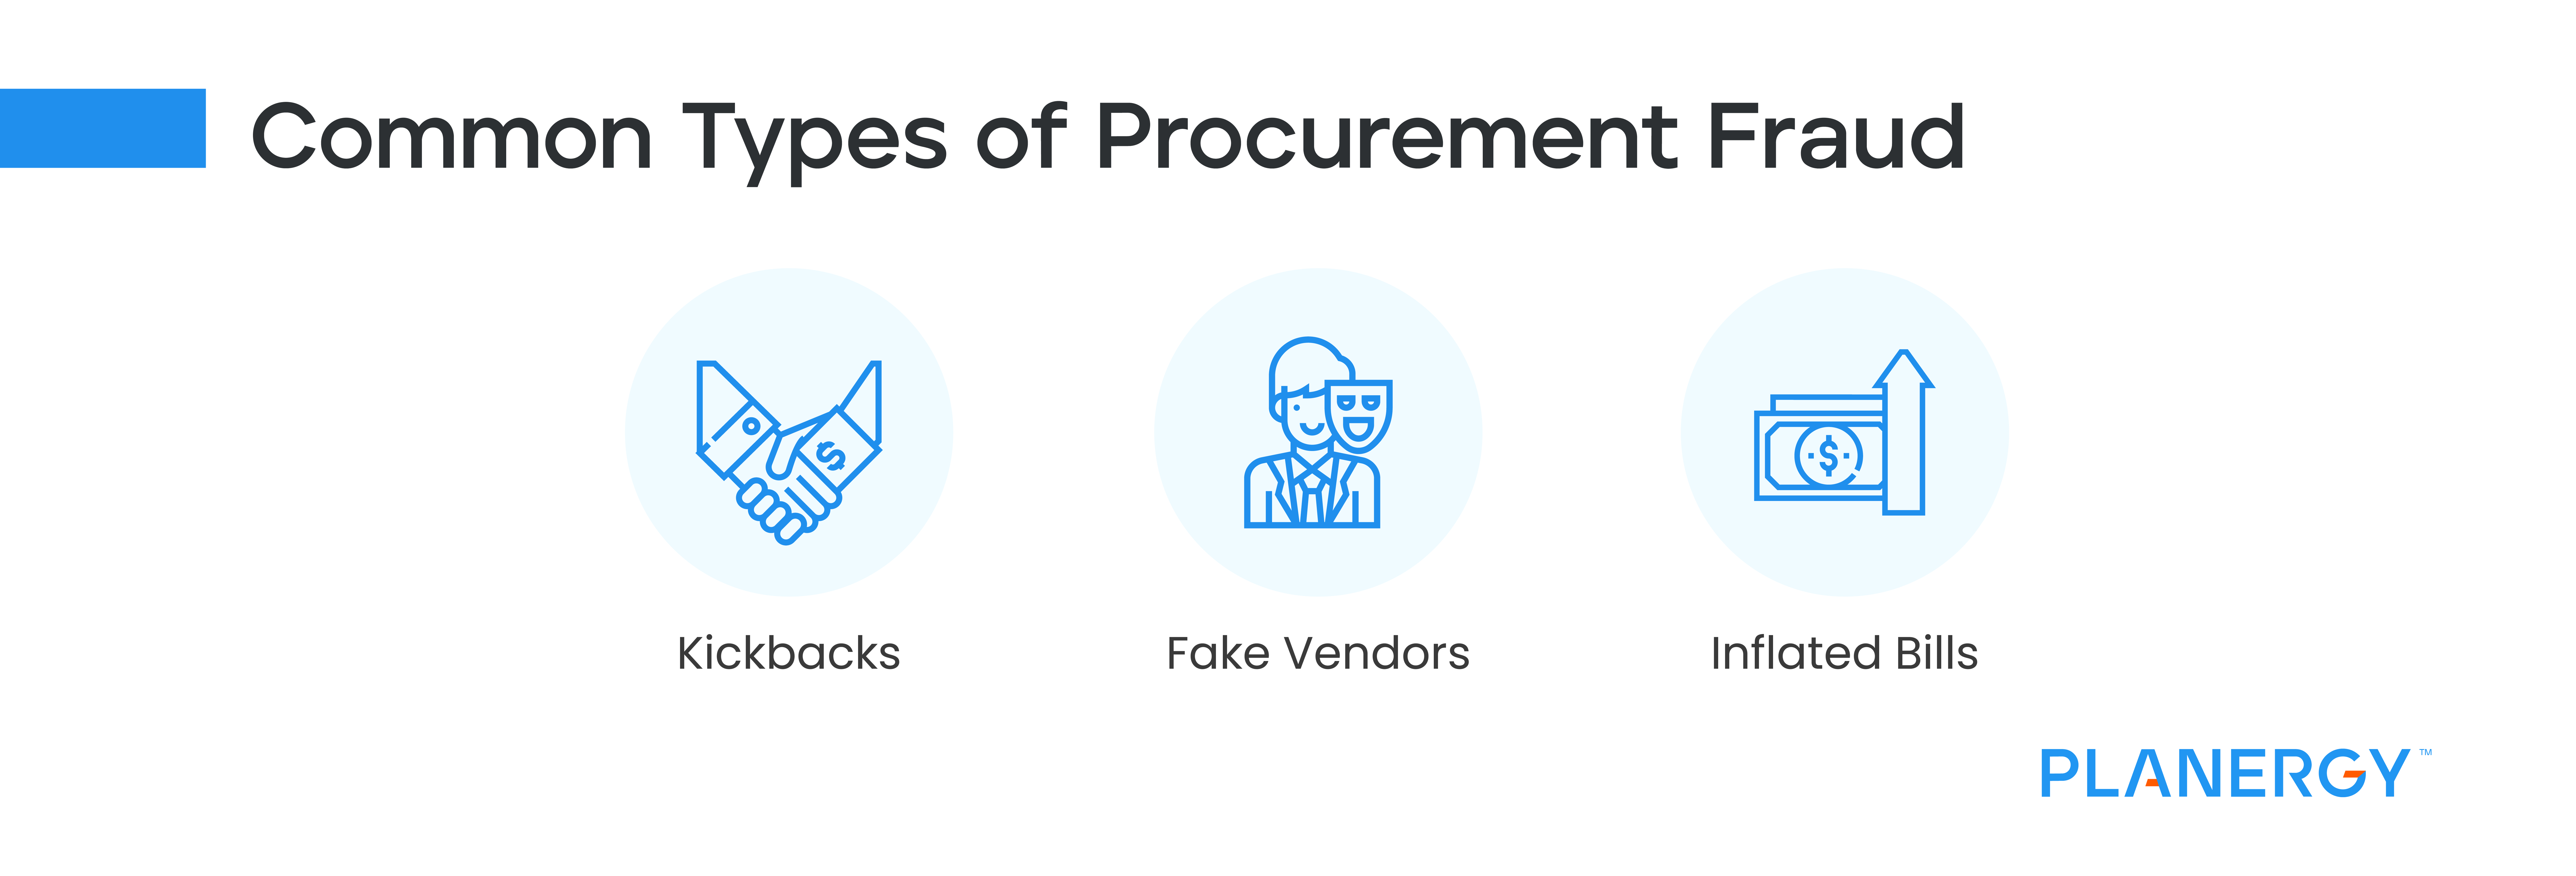 Common types of procurement fraud